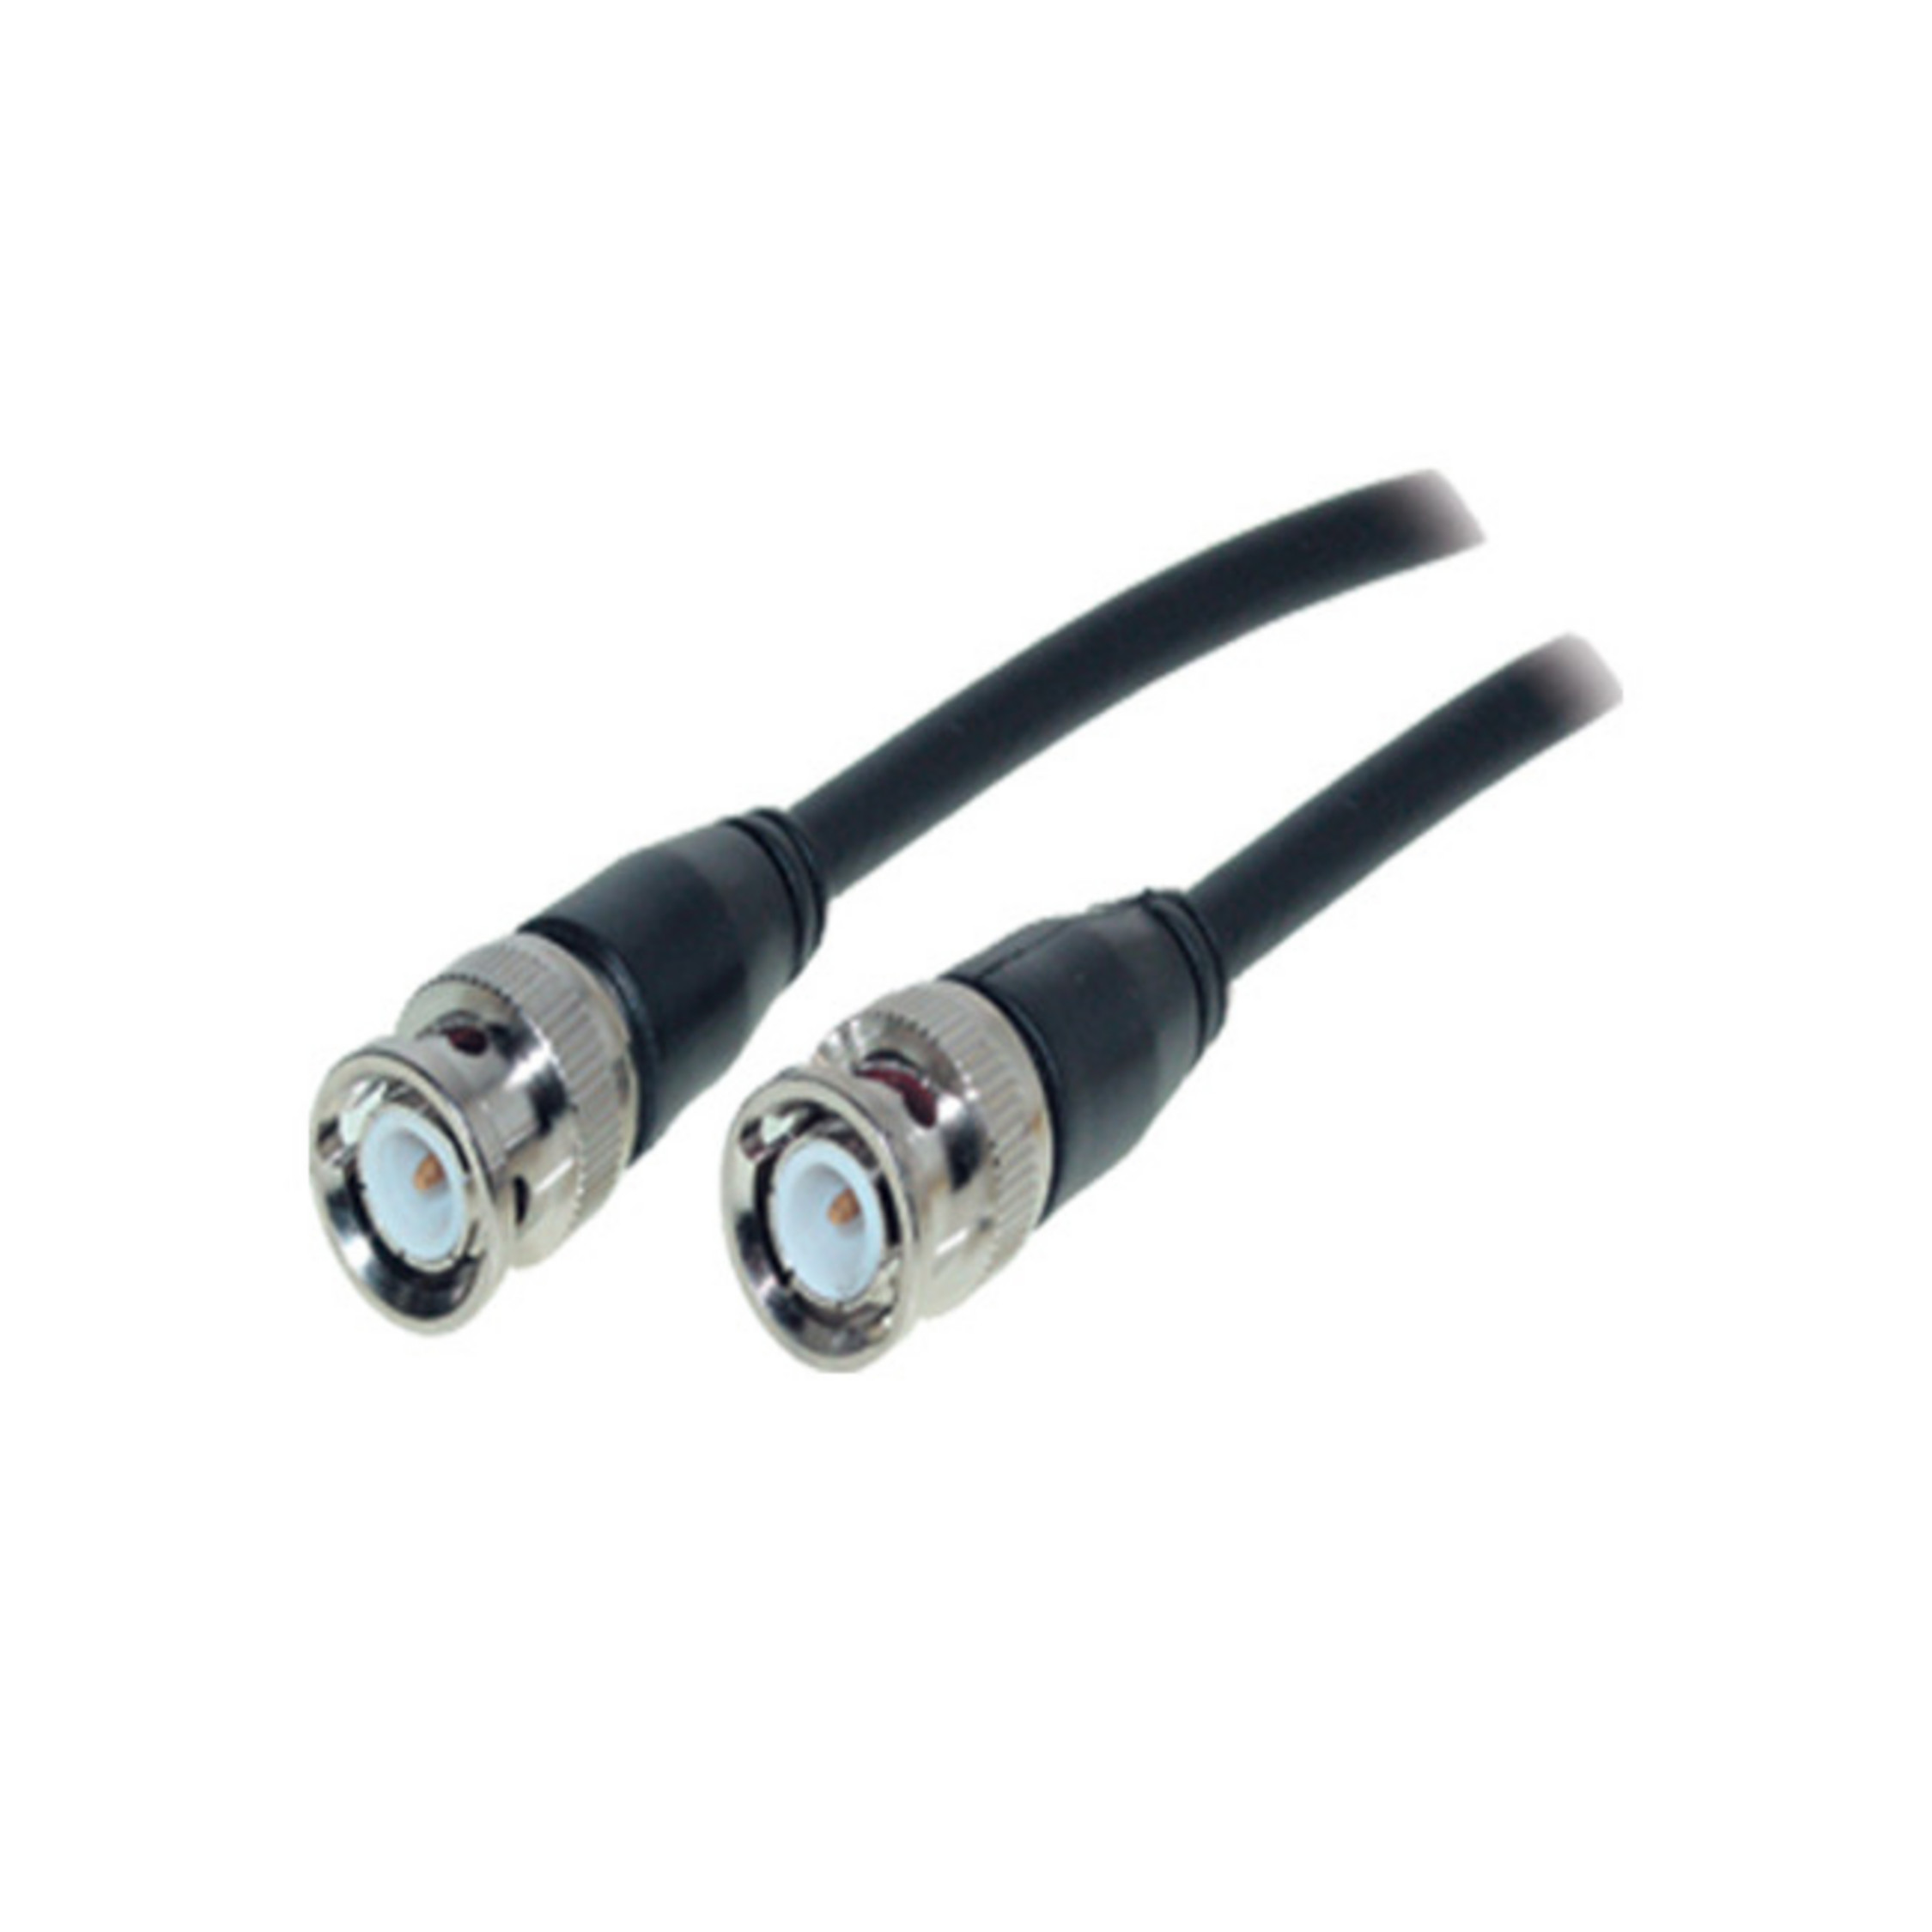 S/CONN MAXIMUM Kabel CONNECTIVITY BNC BNC OHM / Stecker Stecker BNC RG 59 75 15m